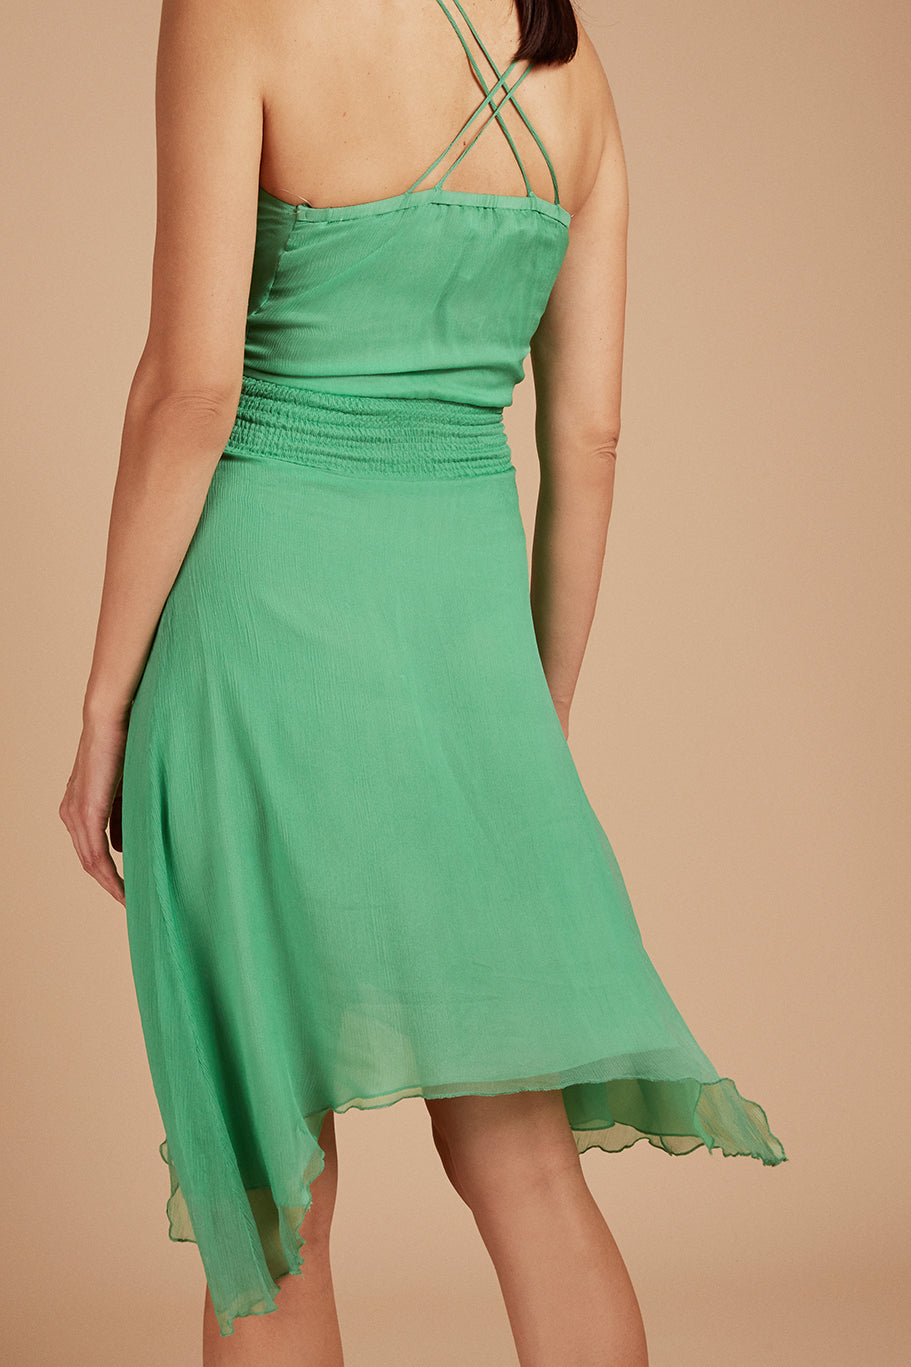 ASOS <br> Green Asymmetrical Silk Dress <br> Size S